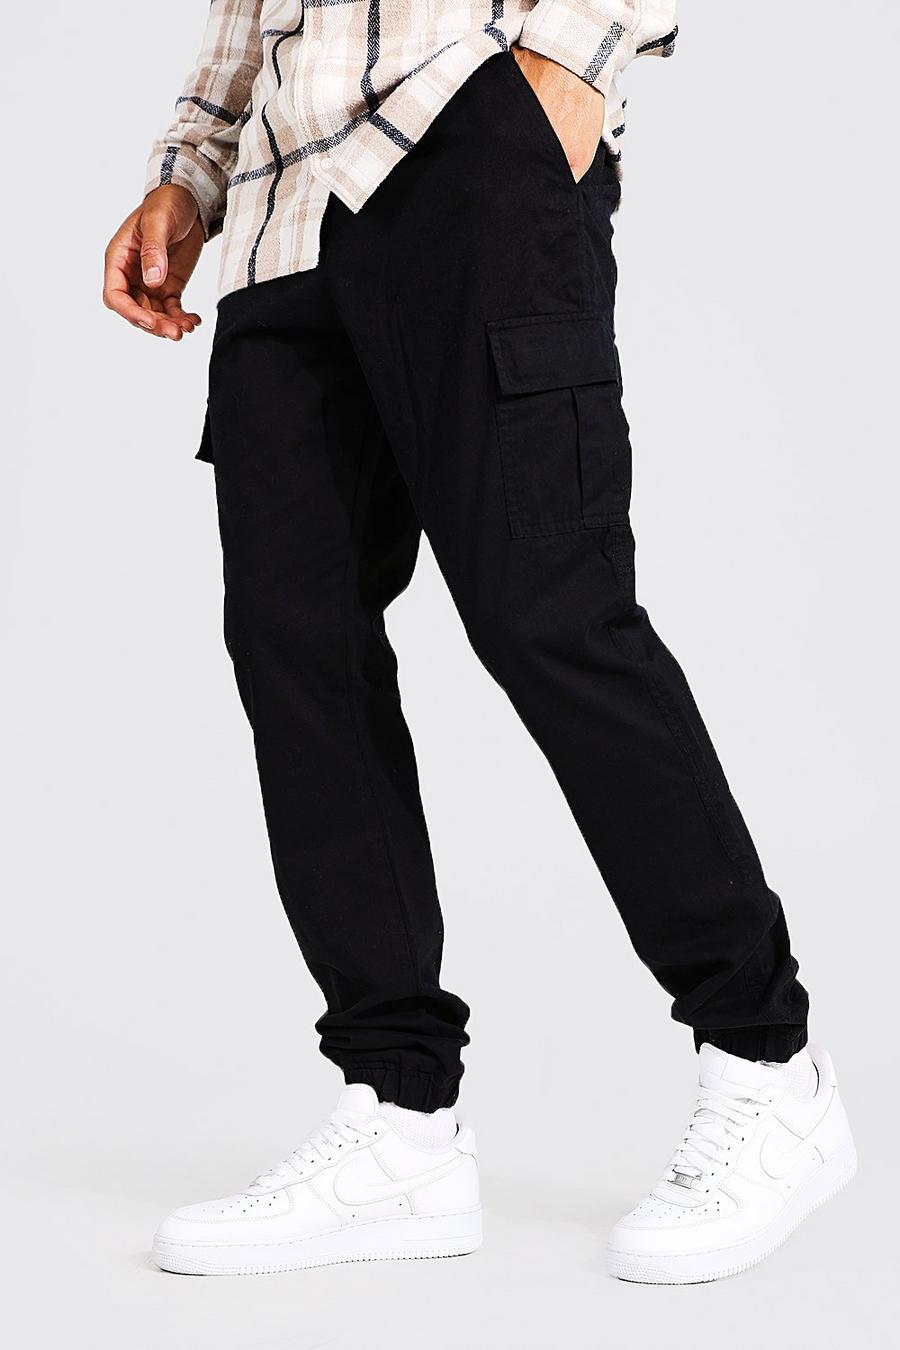 Black negro מכנסי דגמ'ח בגזרה רגילה, לגברים גבוהים